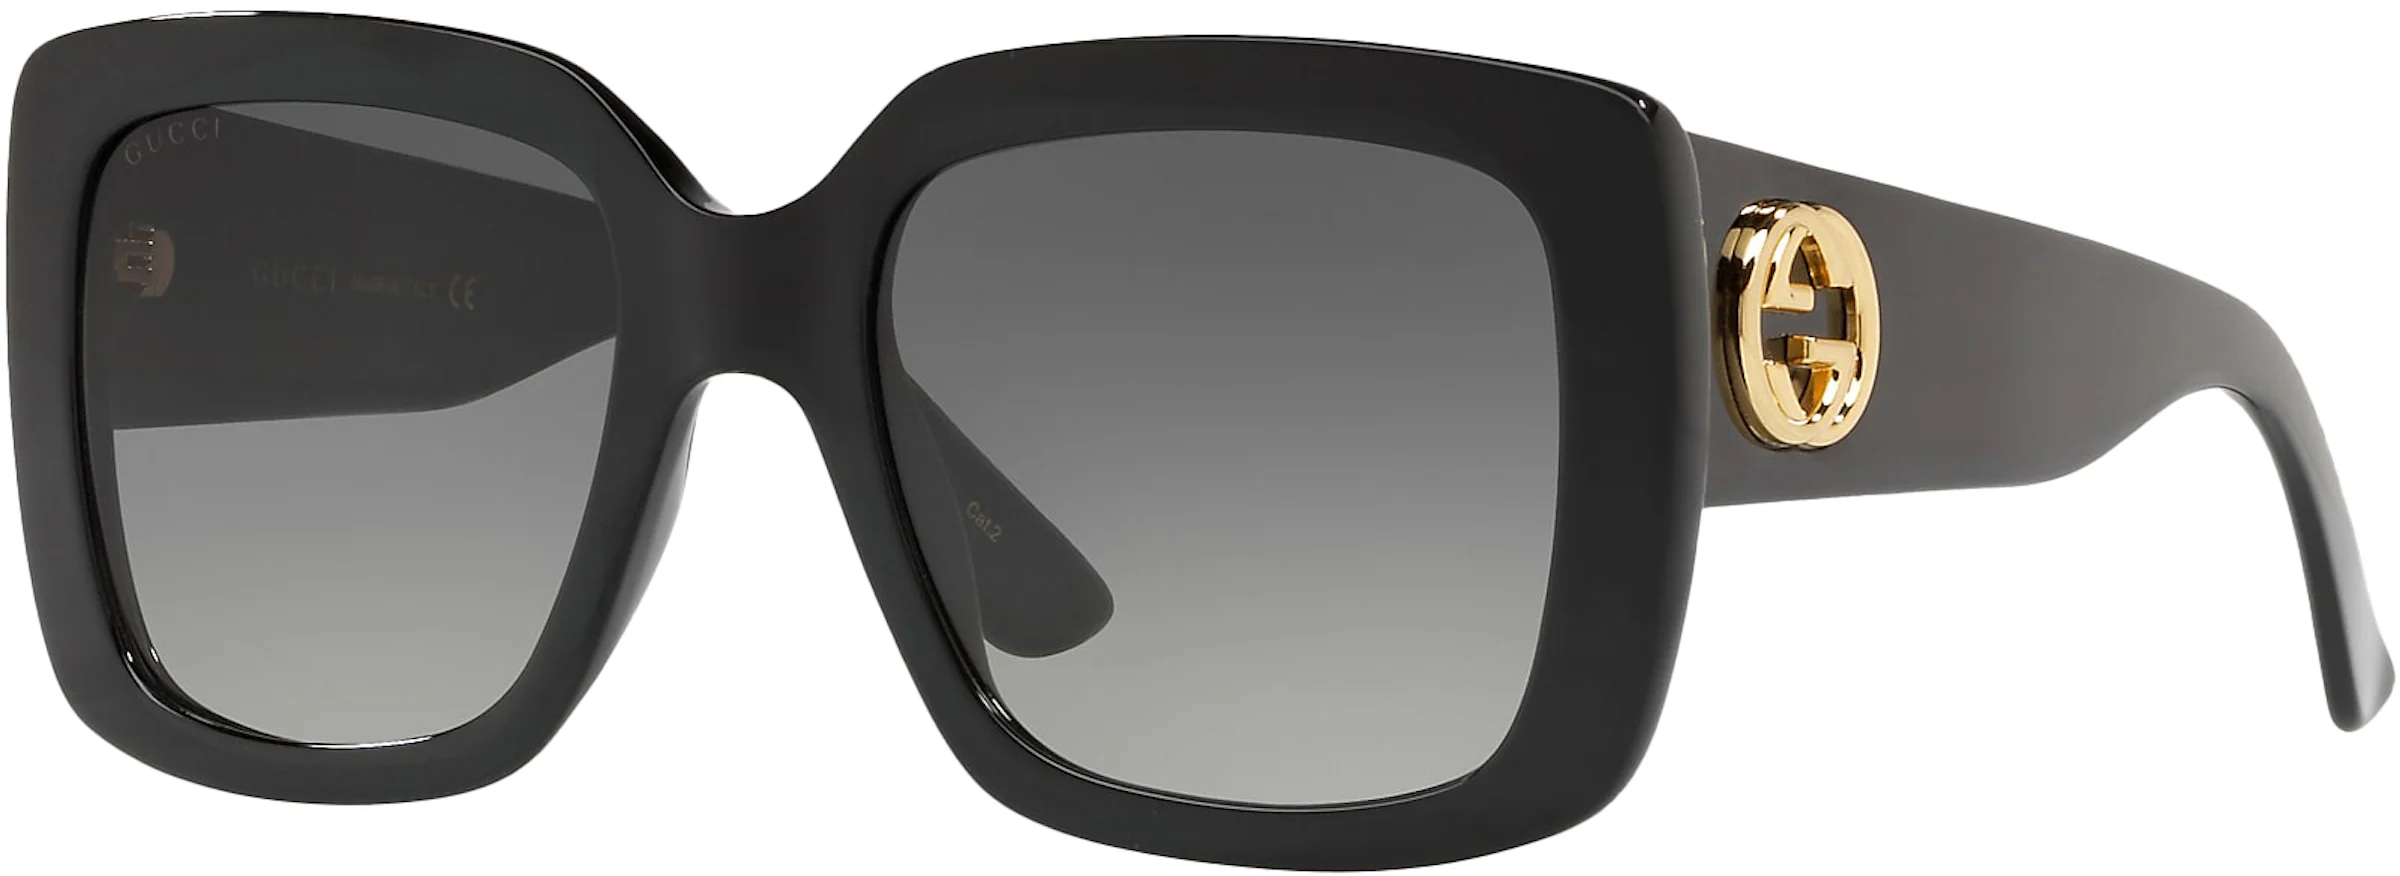 Gucci Square Sunglasses Black (GG0141Sn) in Acetate with Gold-tone - US